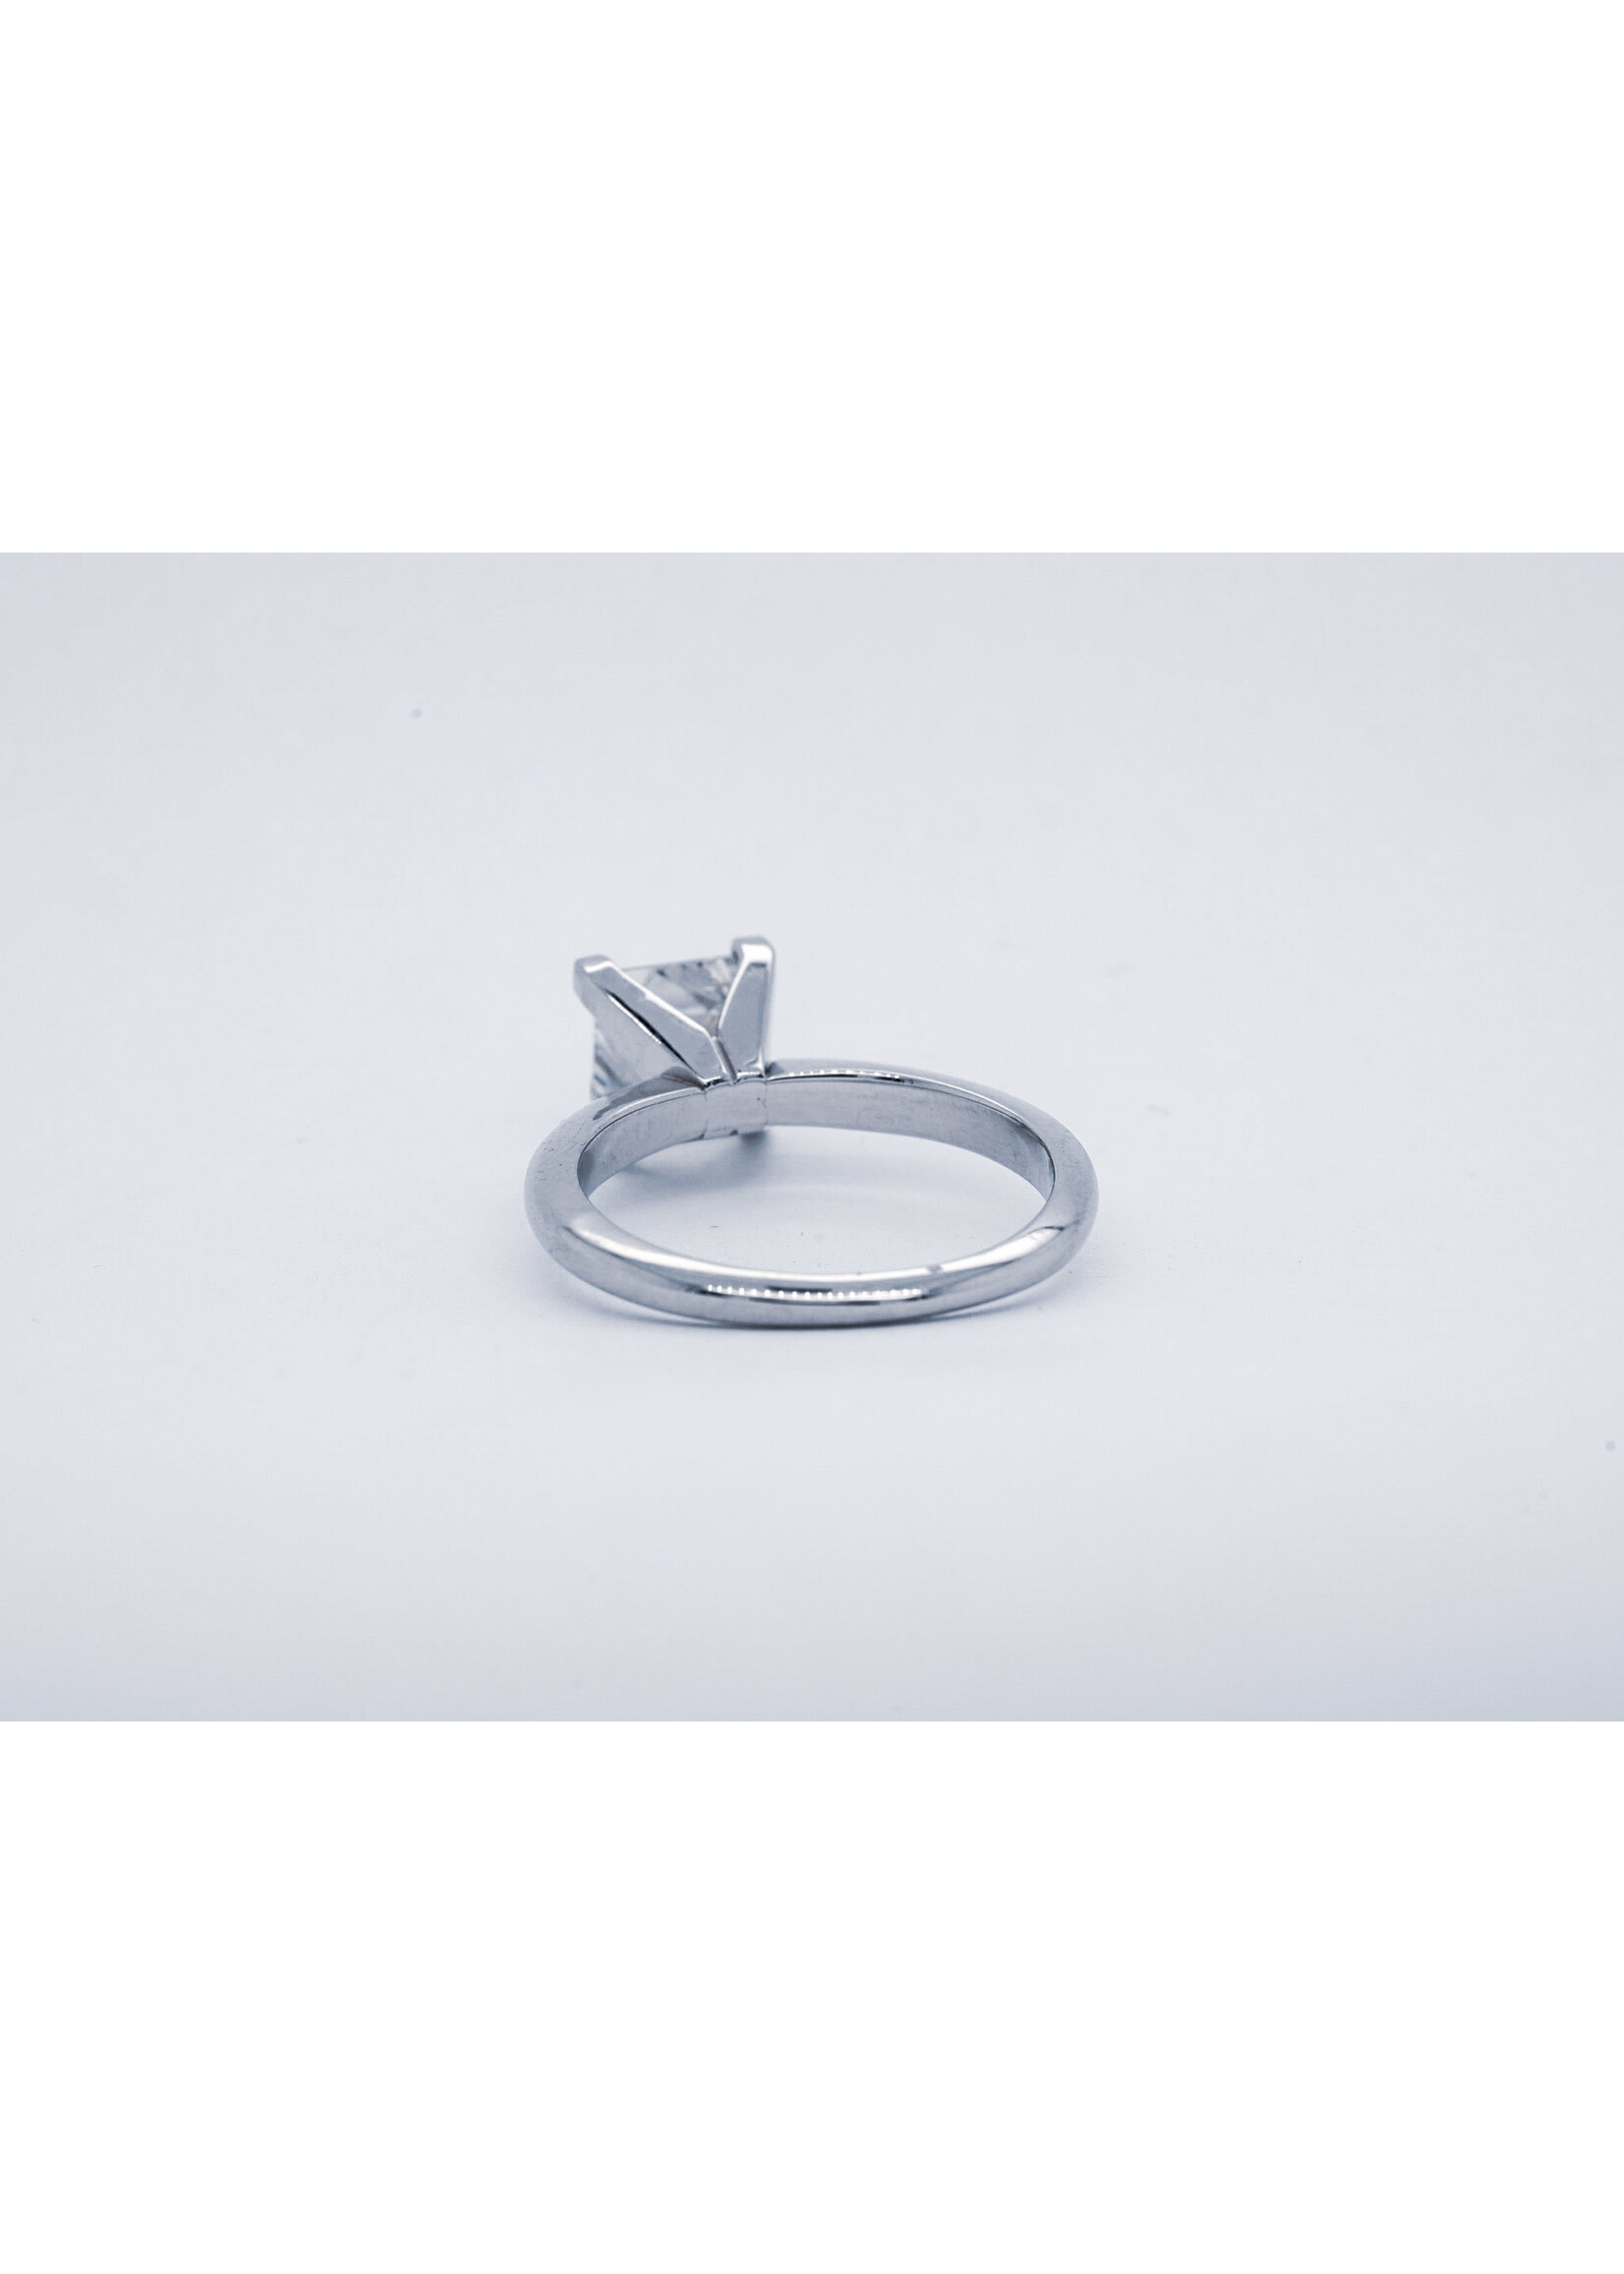 Platinum 6.01g 2.13ct L/I1 GIA Princess Cut Diamond Solitaire Engagement Ring (size 7.5)